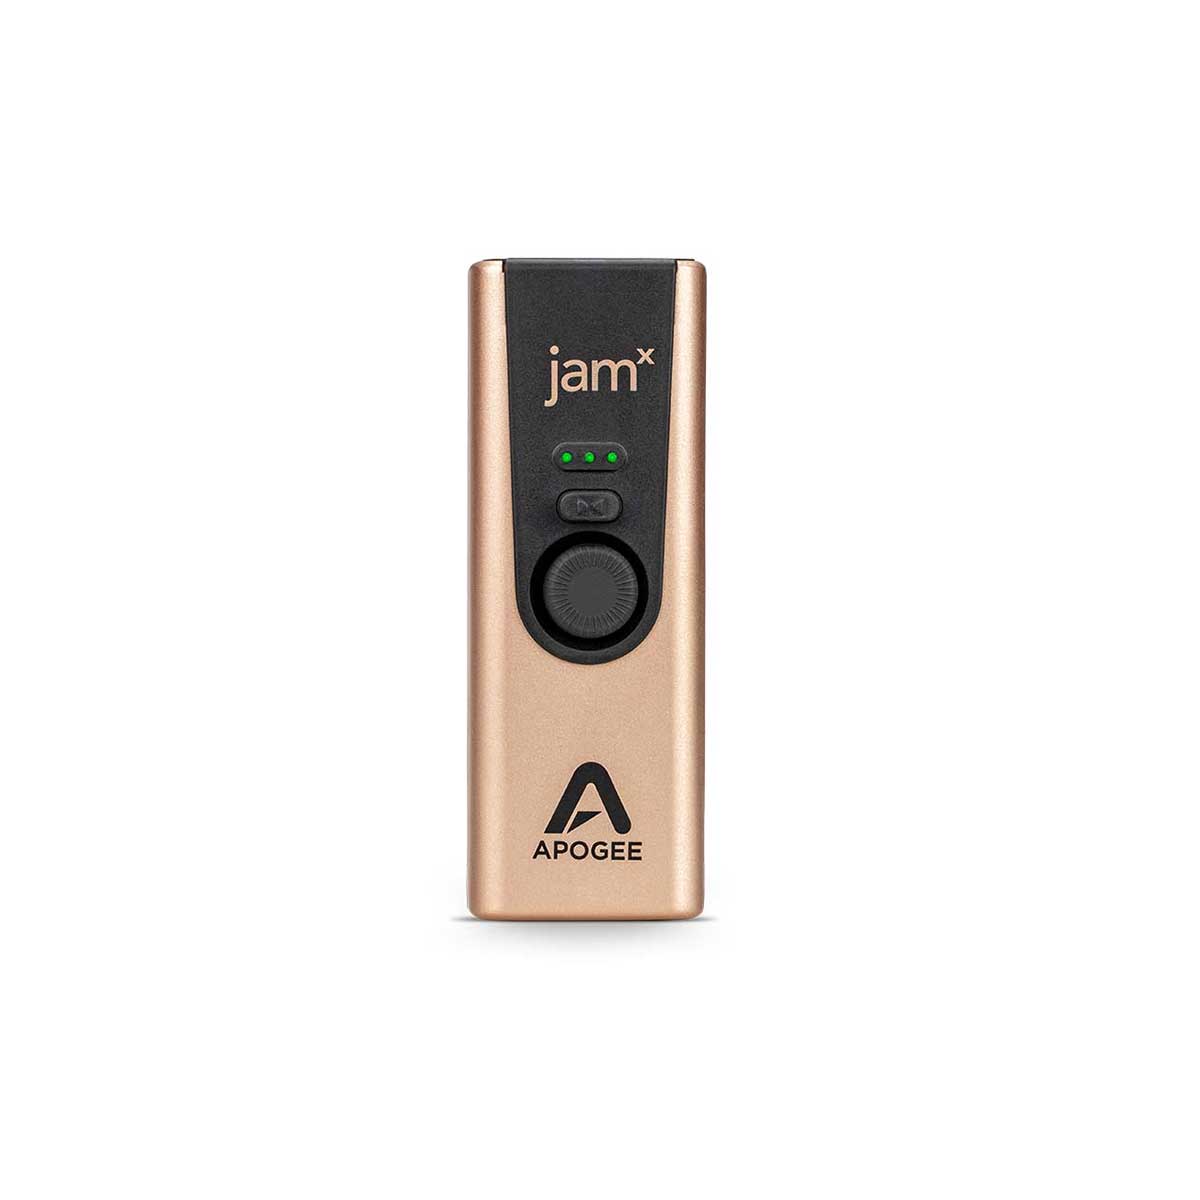 Apogee Jam X USB-C Audio Interface with build-in compressor